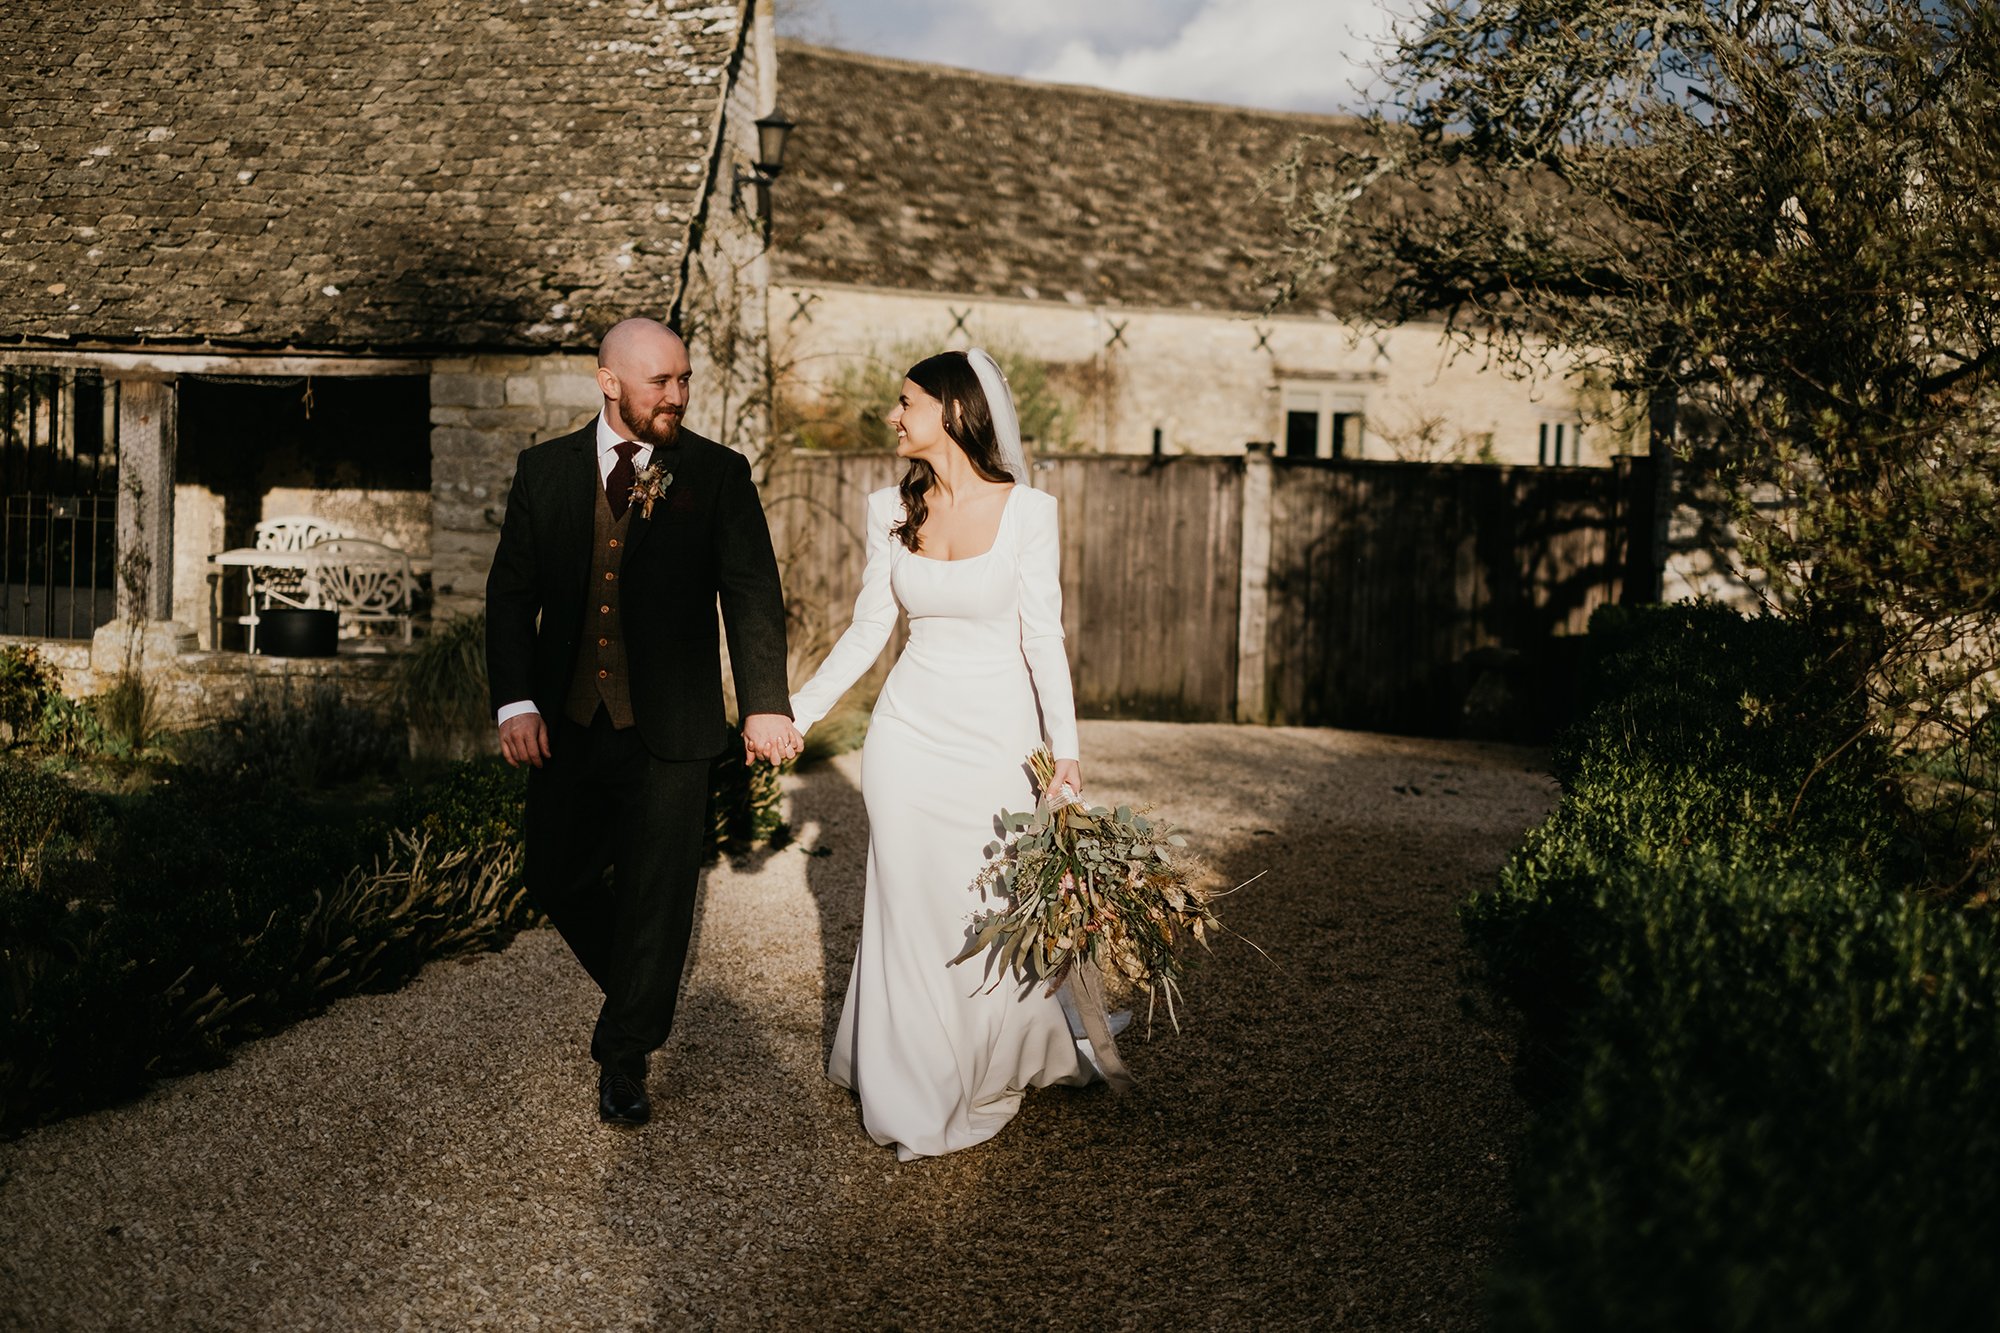 Caswell-house-wedding-photographer-oxford-3.jpg